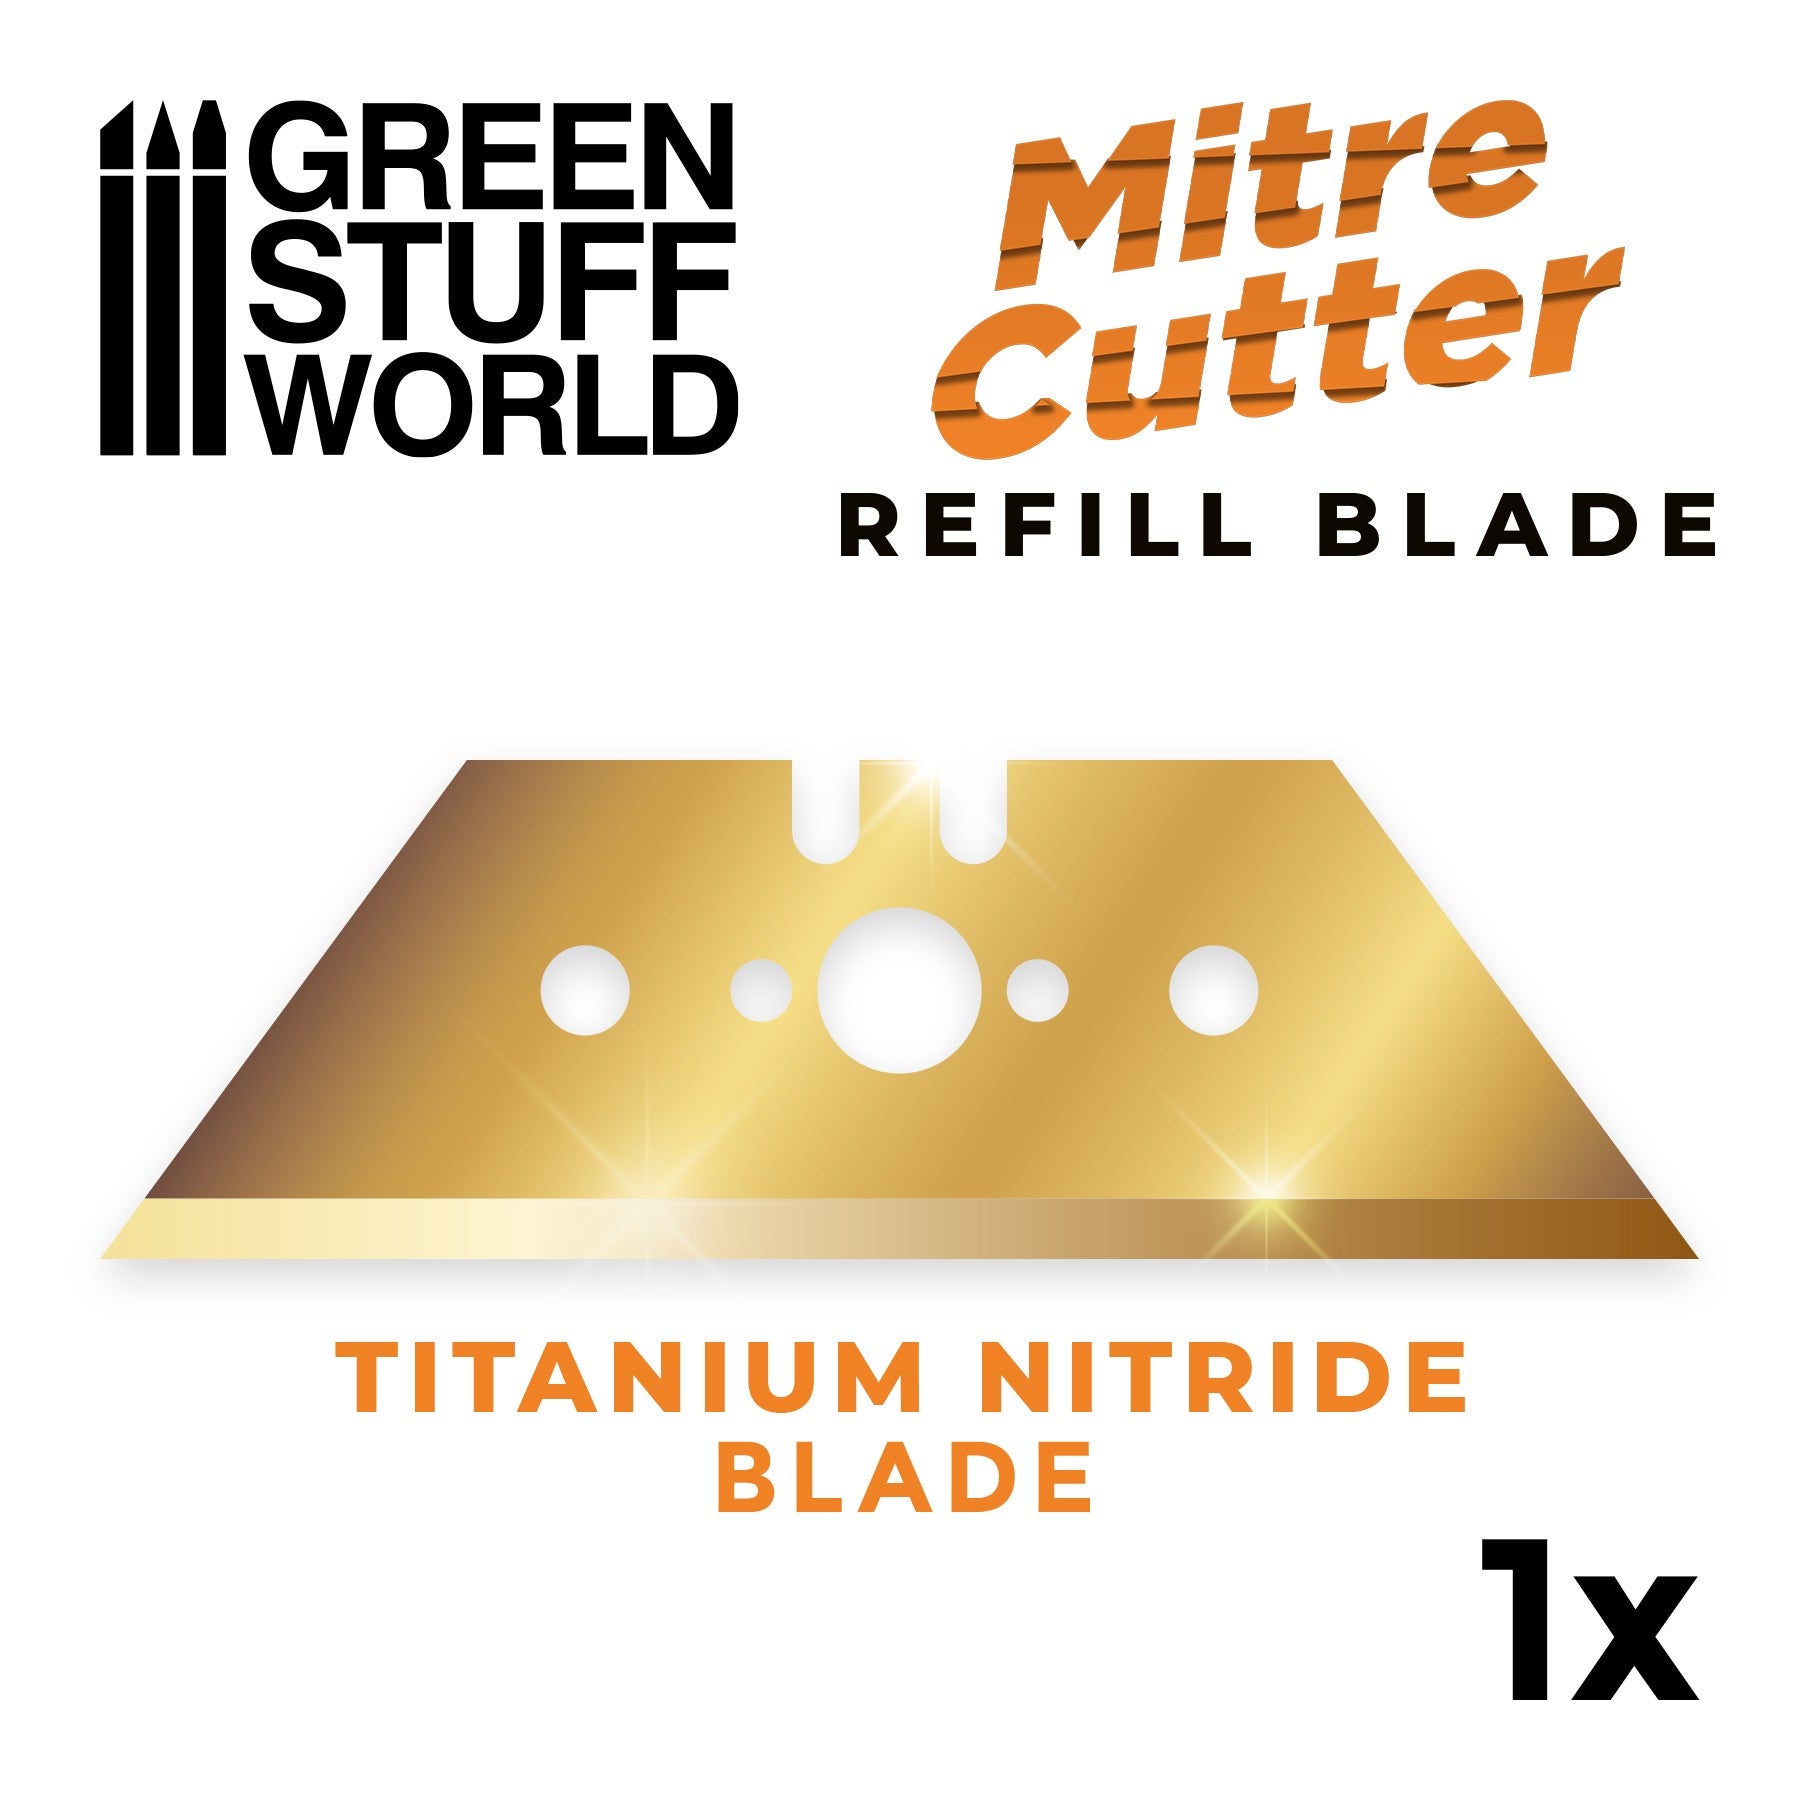 11371 - Mitre Cutter spare titanium blades - 0.65 x 61mm